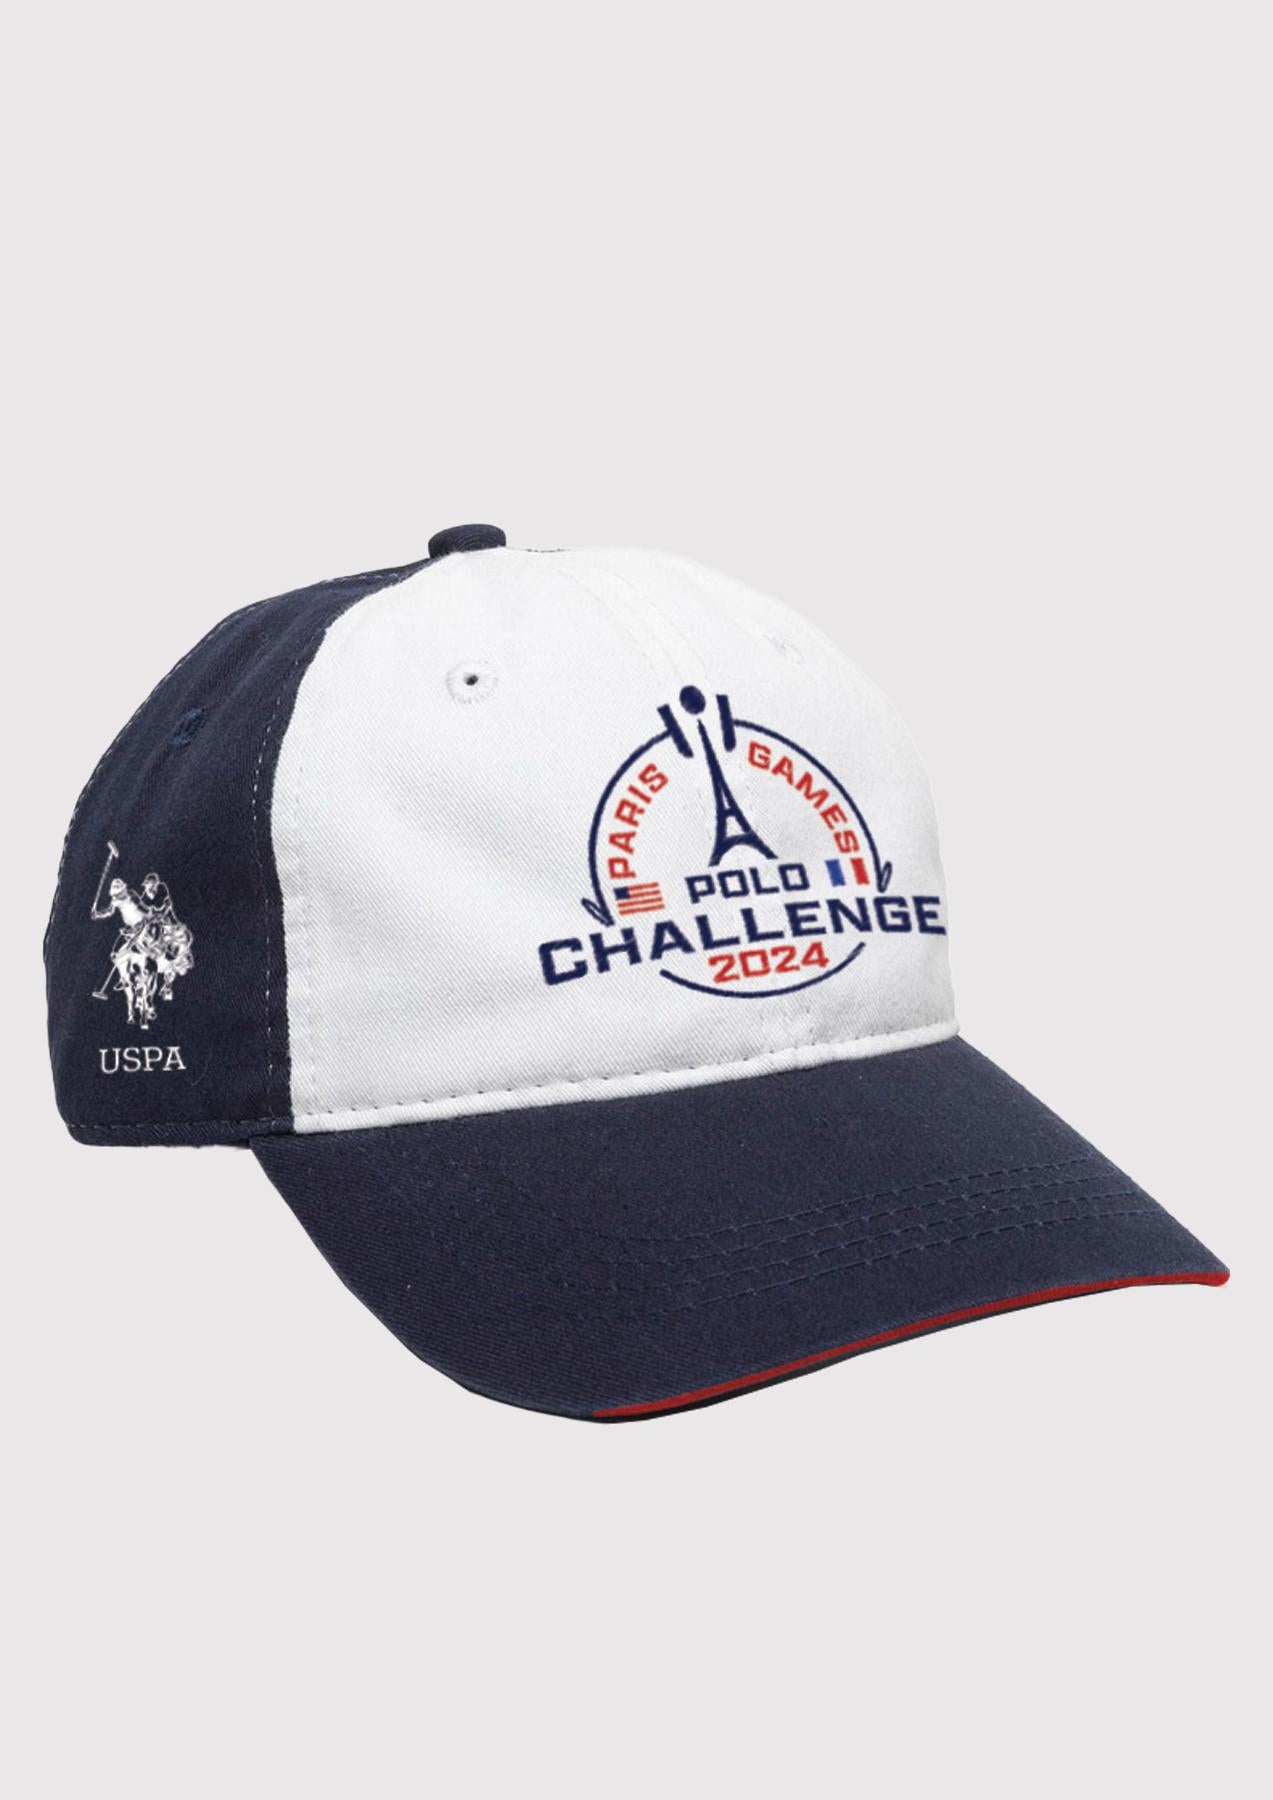 USPA Sport Paris Polo Challenge Twill Baseball Cap